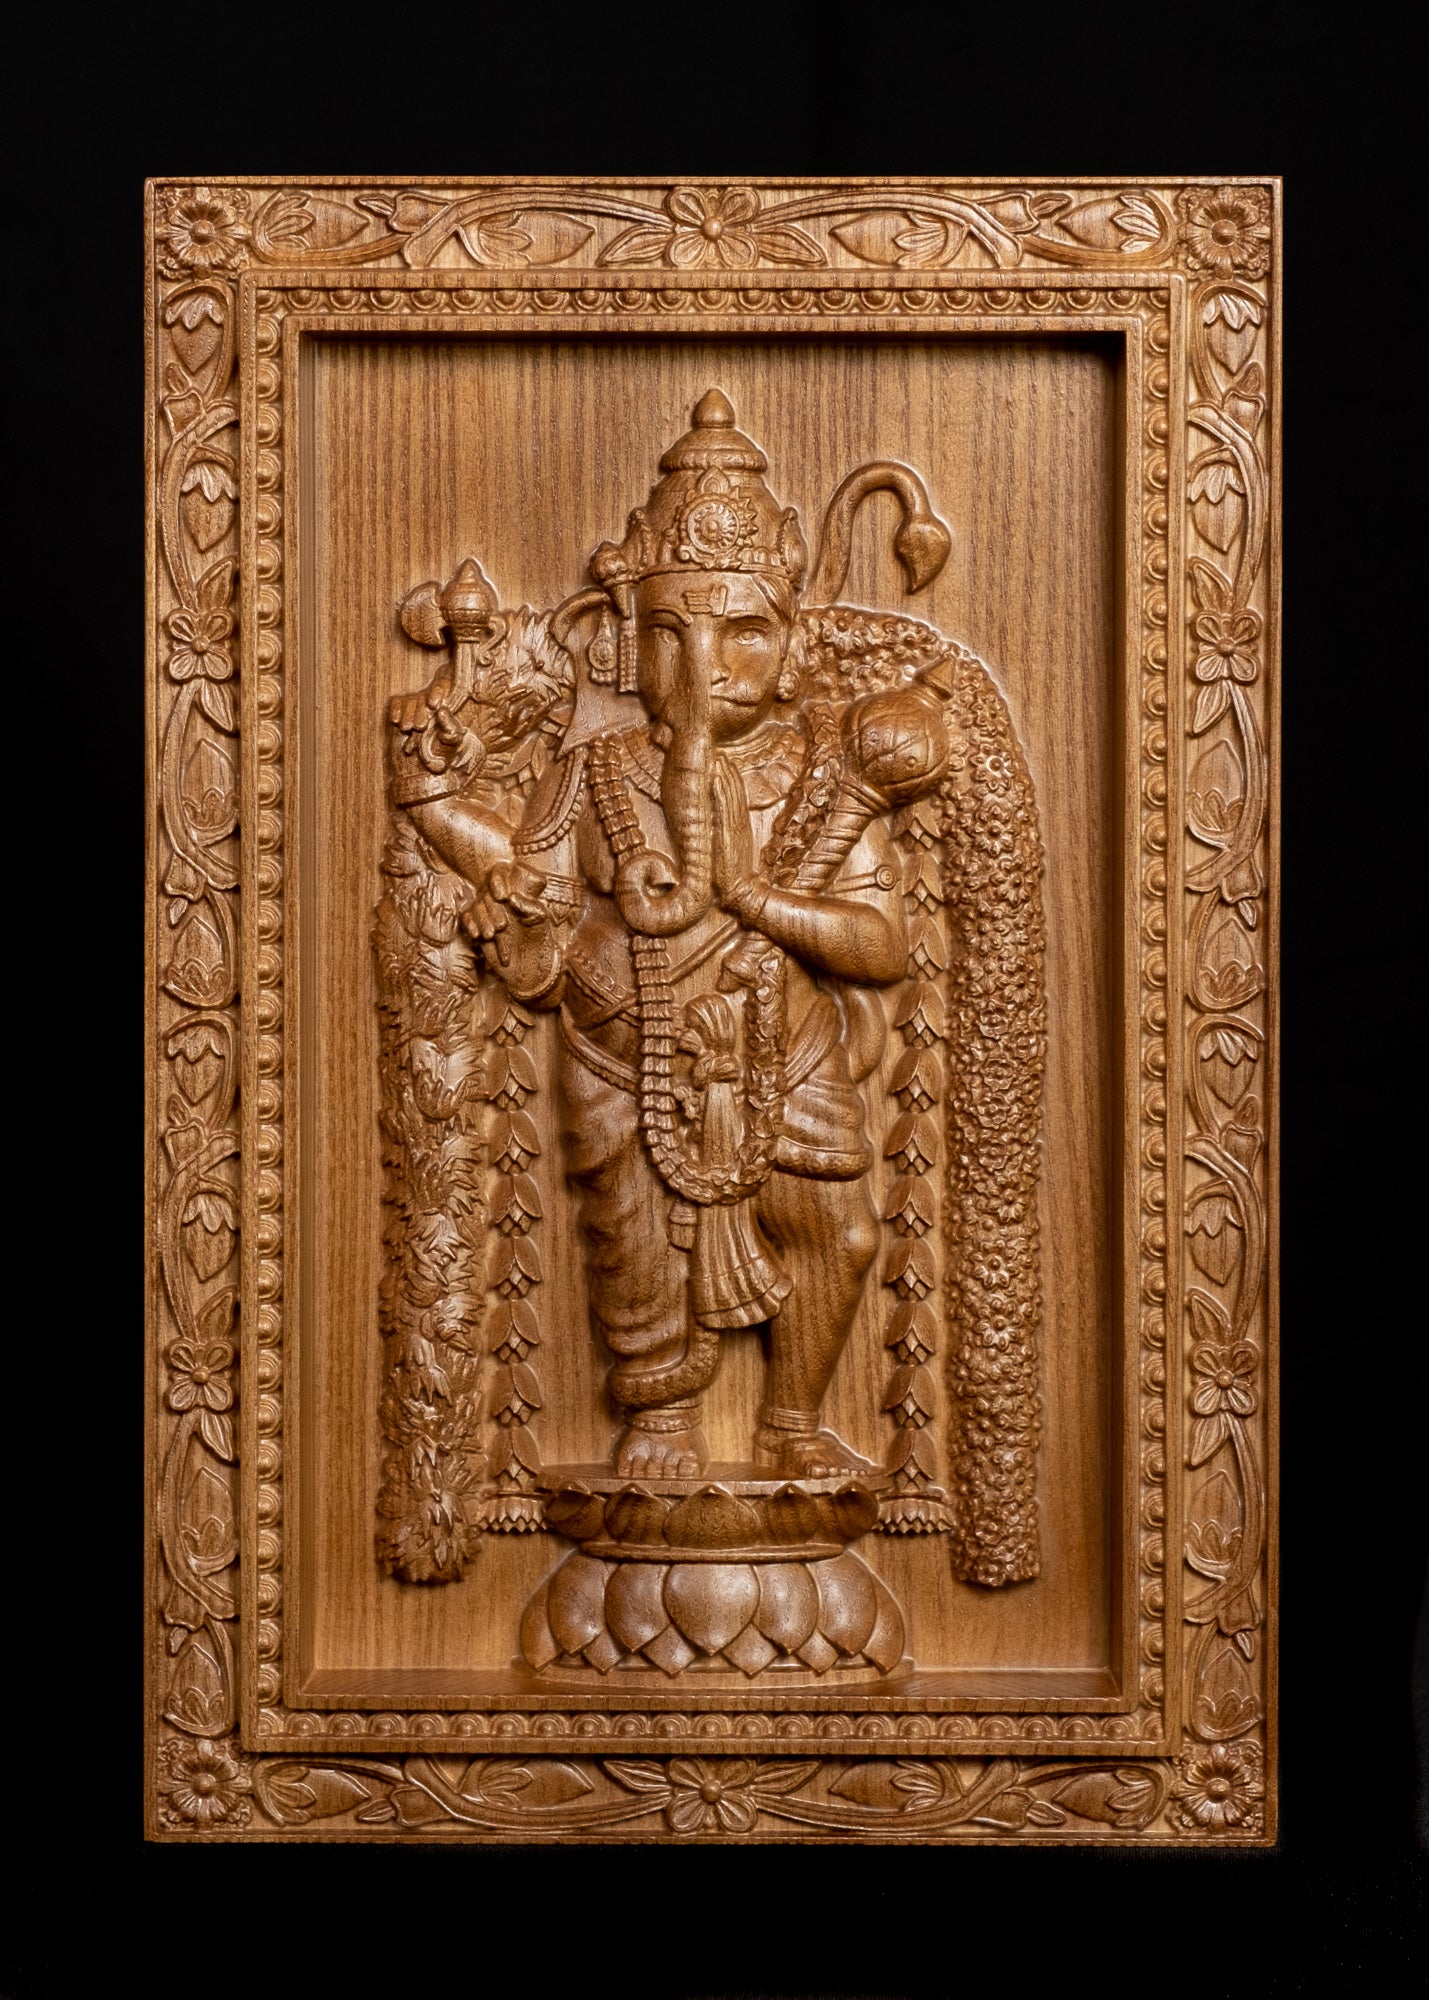 Adhyantha Prabhu (Half Ganesh Half Hanuman) in a Floral Frame